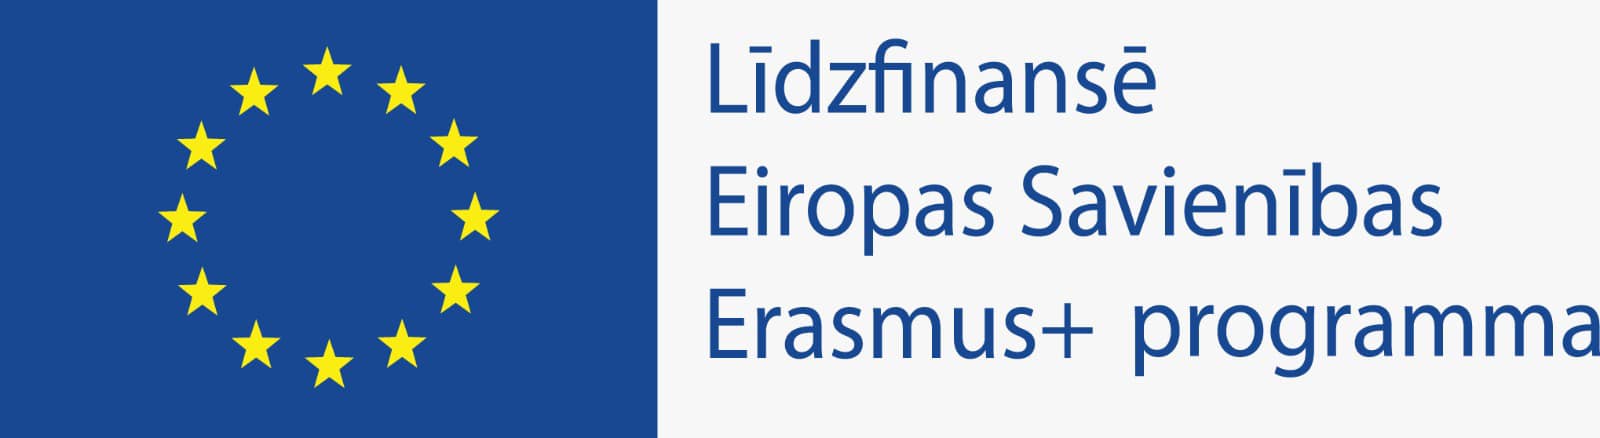 eiropas erasmus logo